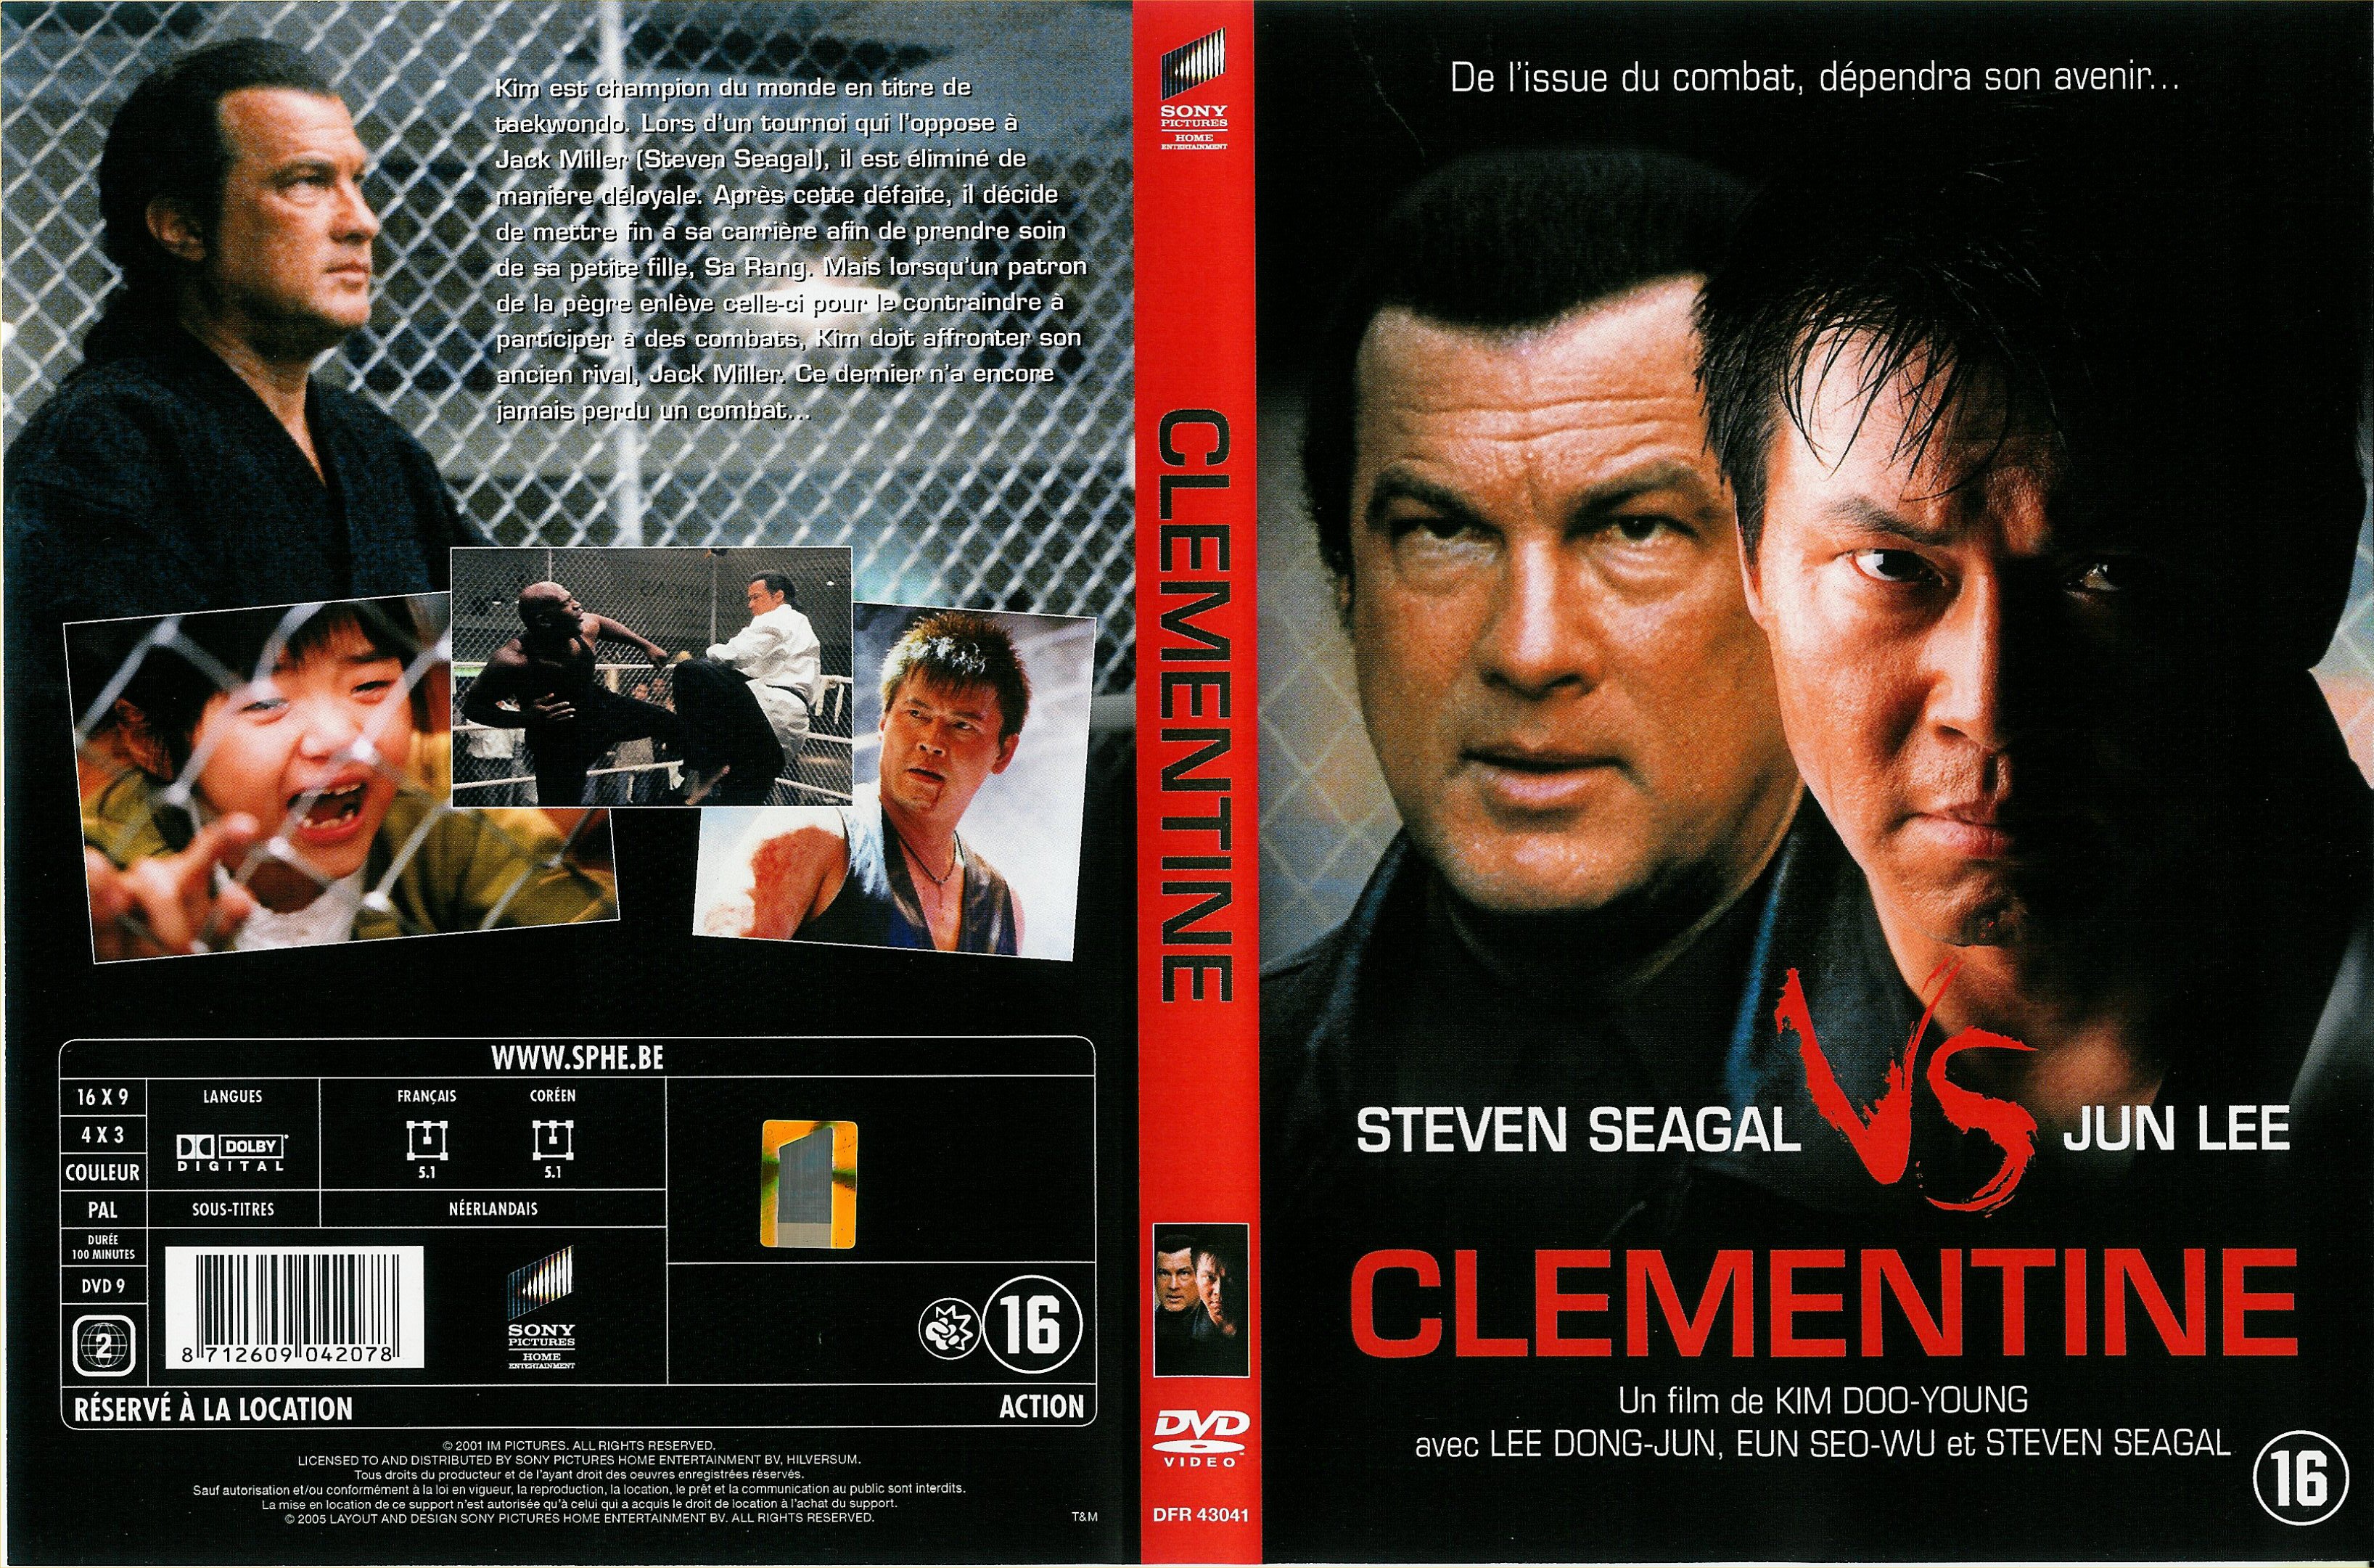 Jaquette DVD Clementine (Steven Seagal)